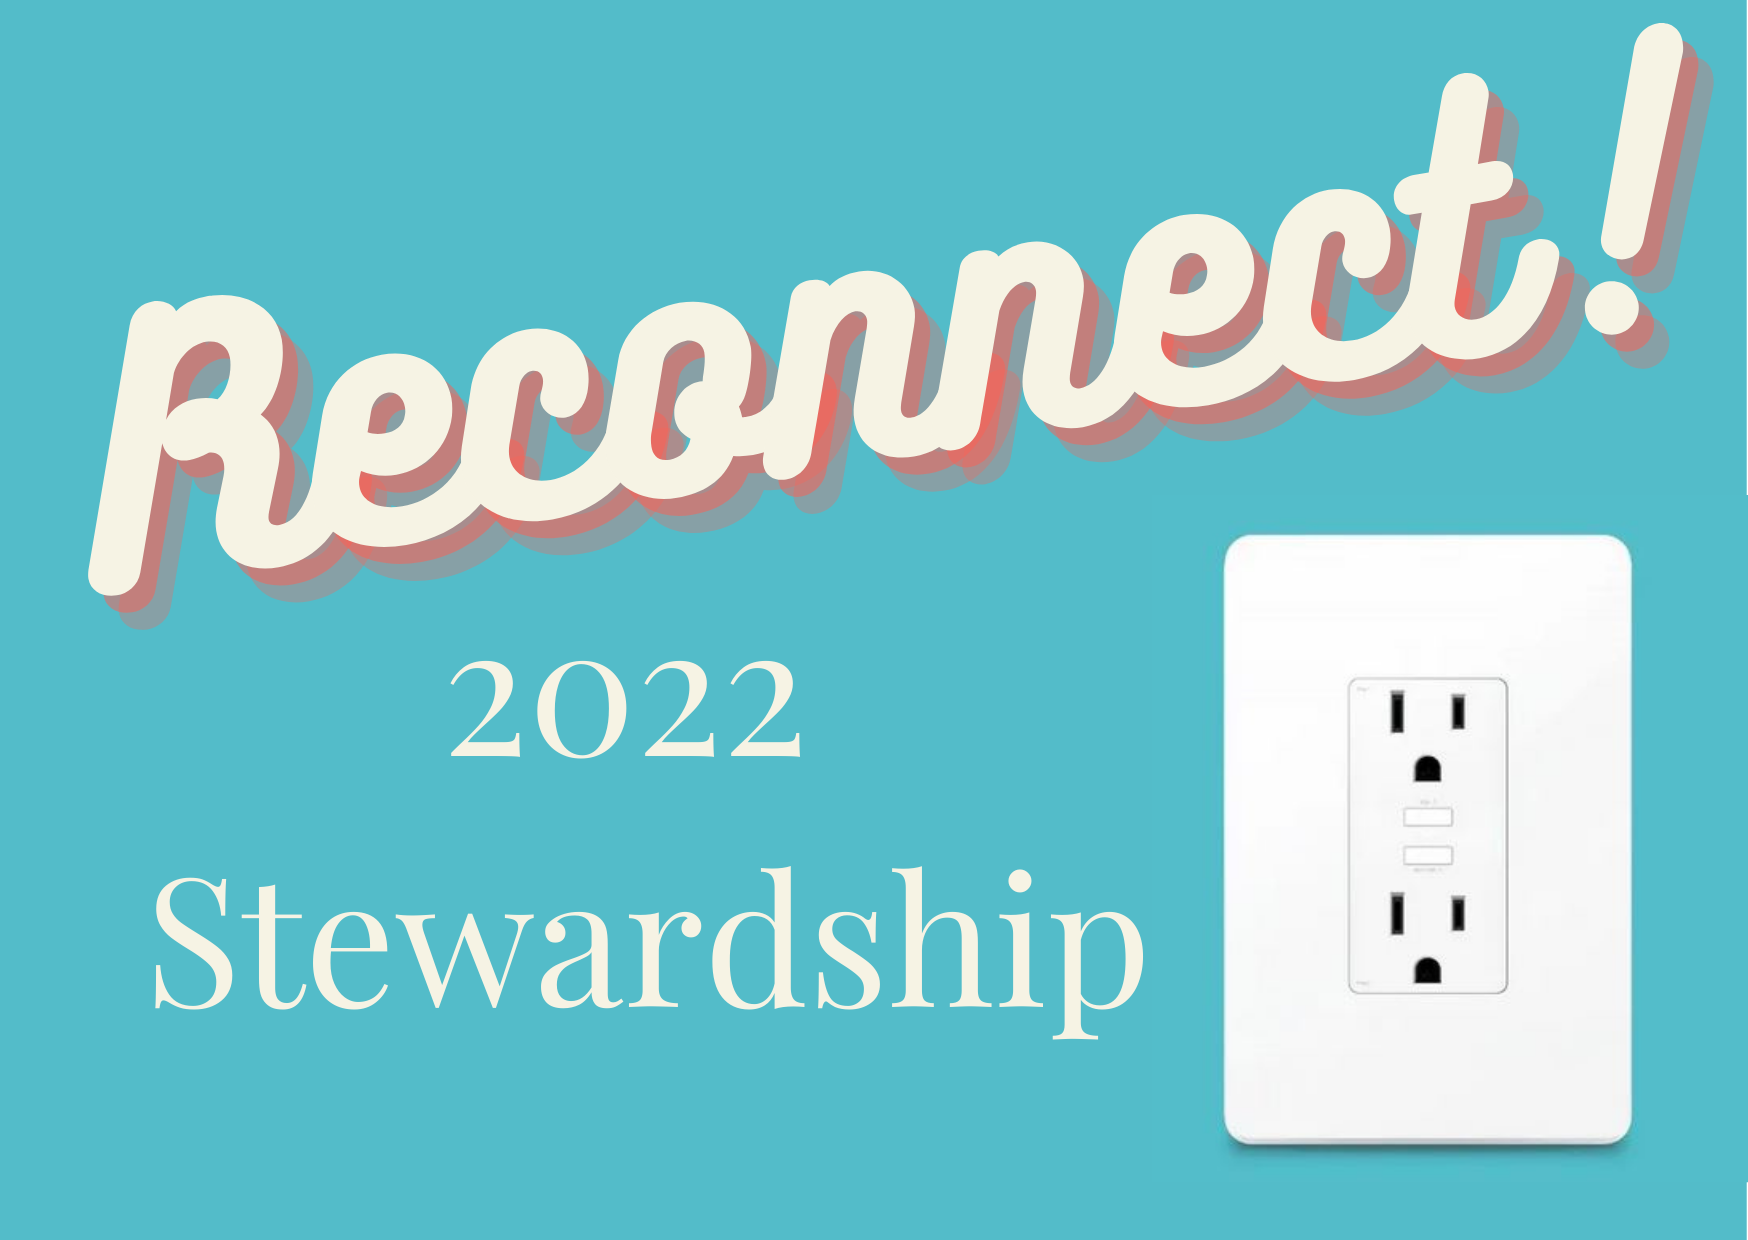 2022 Stewardship: Reconnect